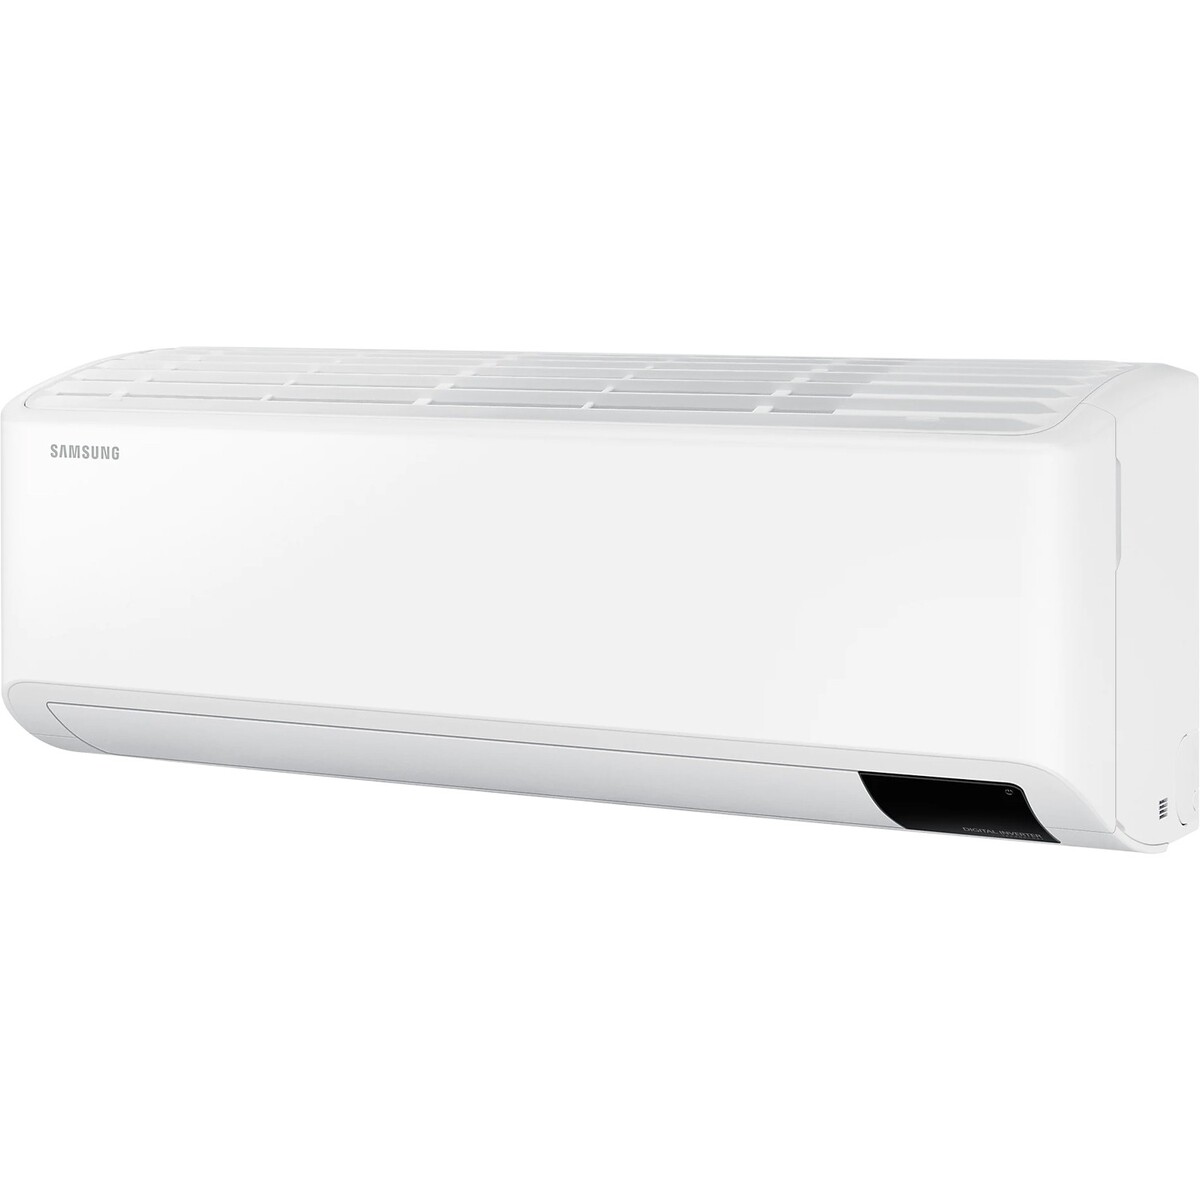 Samsung Inverter Air Conditioner AR18BY5YAWK 1.5 Ton 5*